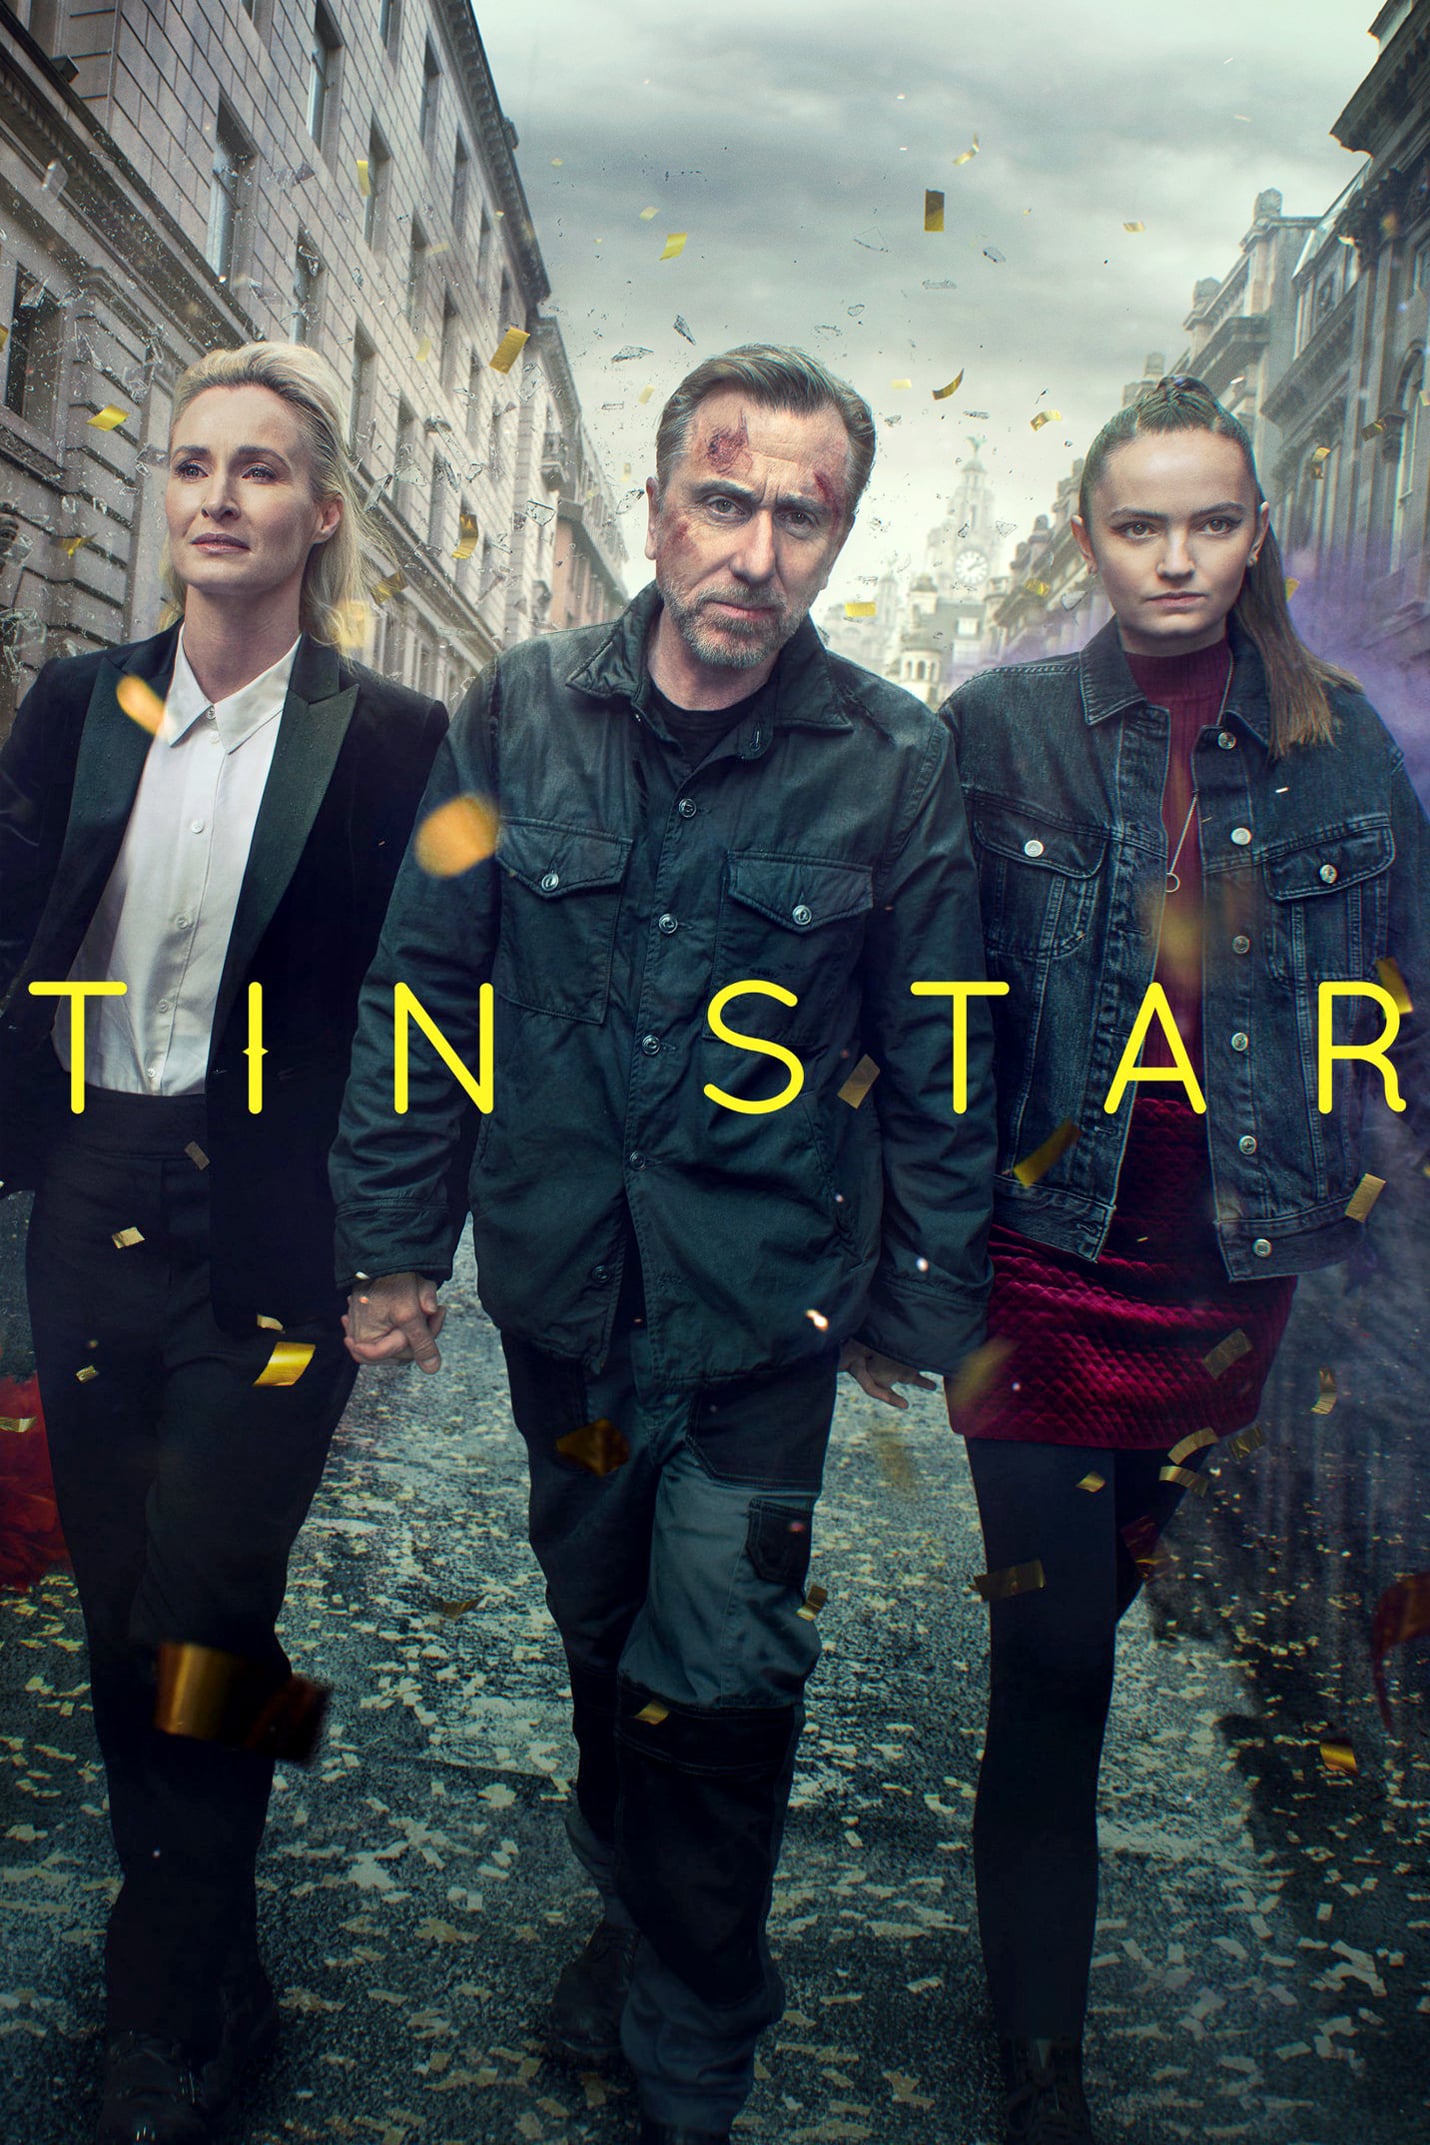 Tin Star (2017)